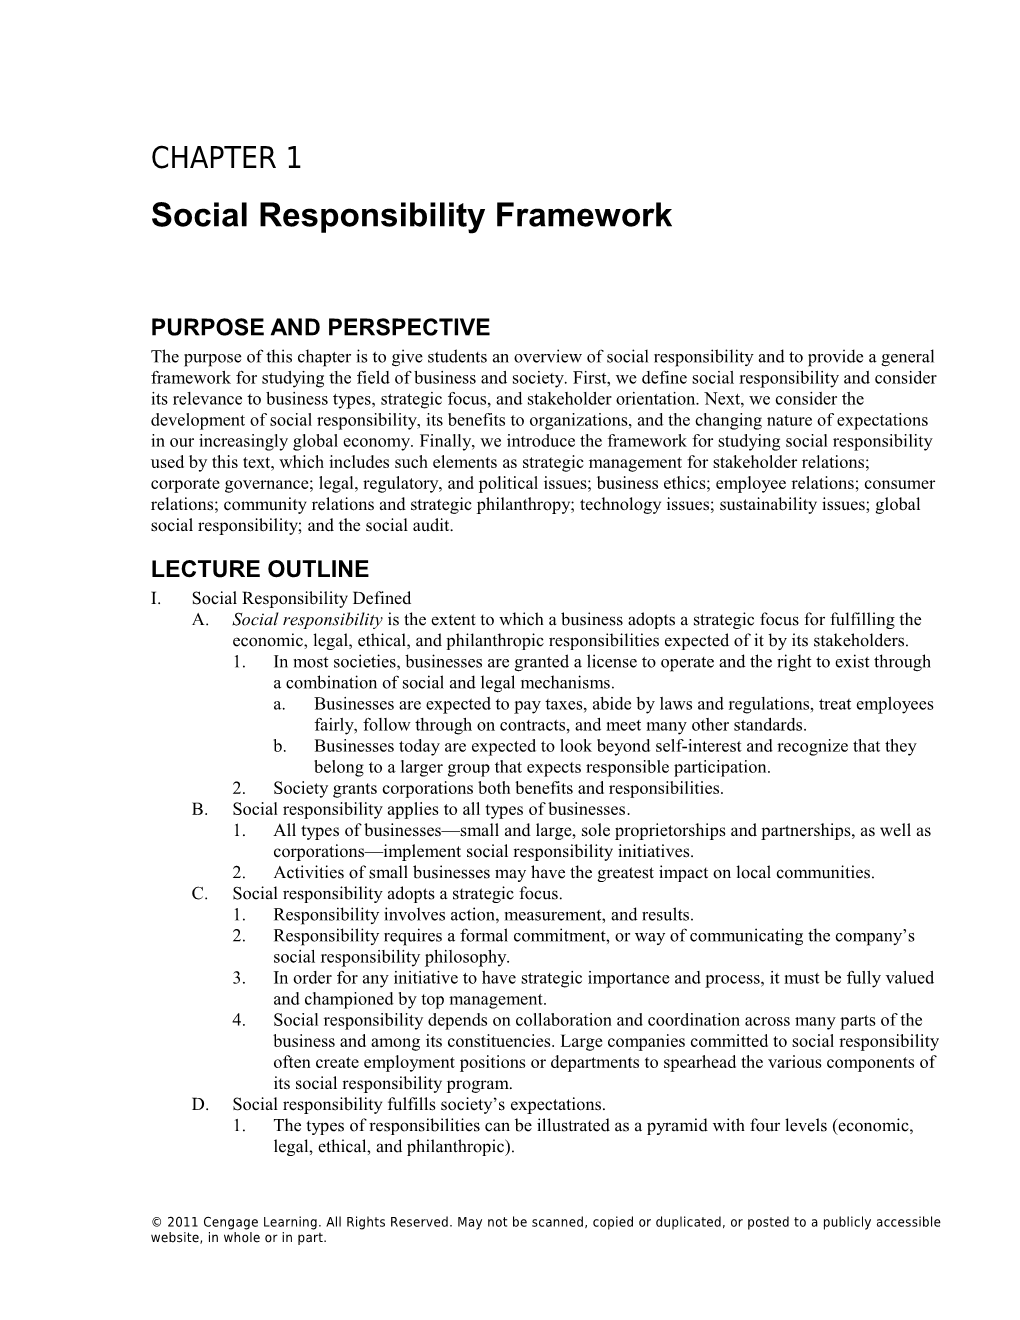 Chapter 1: Social Responsibility Framework 5